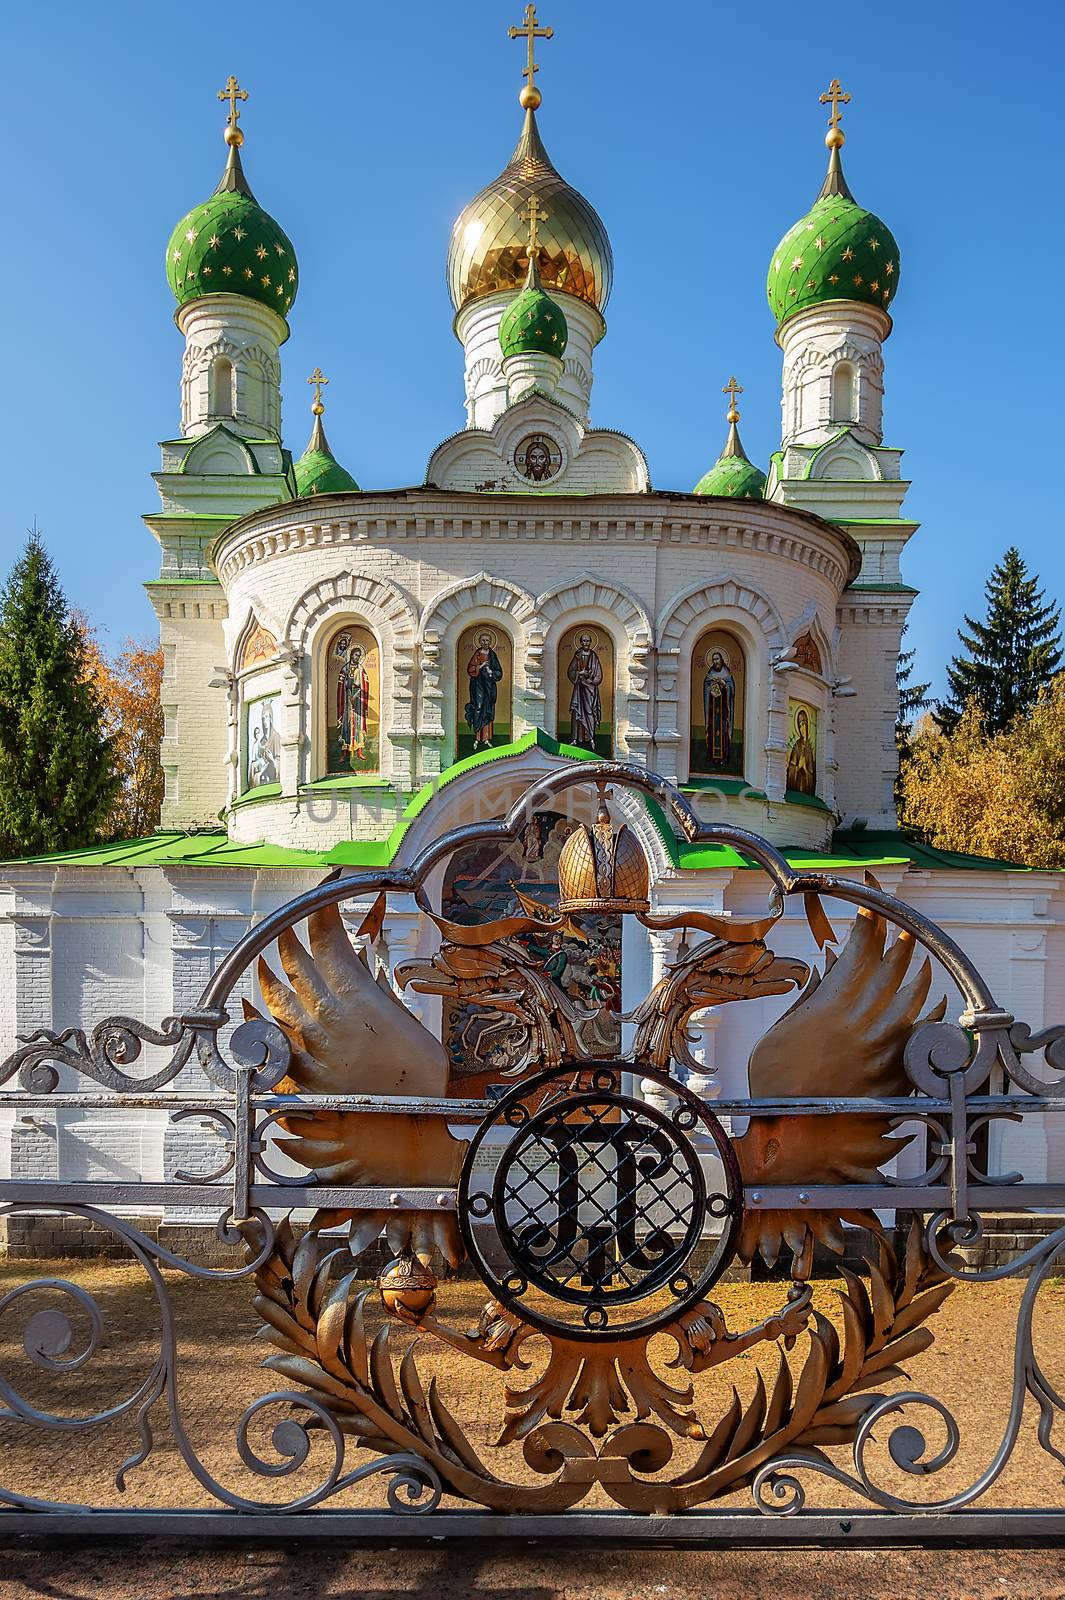 Orthodox Samson church on the battlefield Battle of Poltava, Ukrainian modernism.